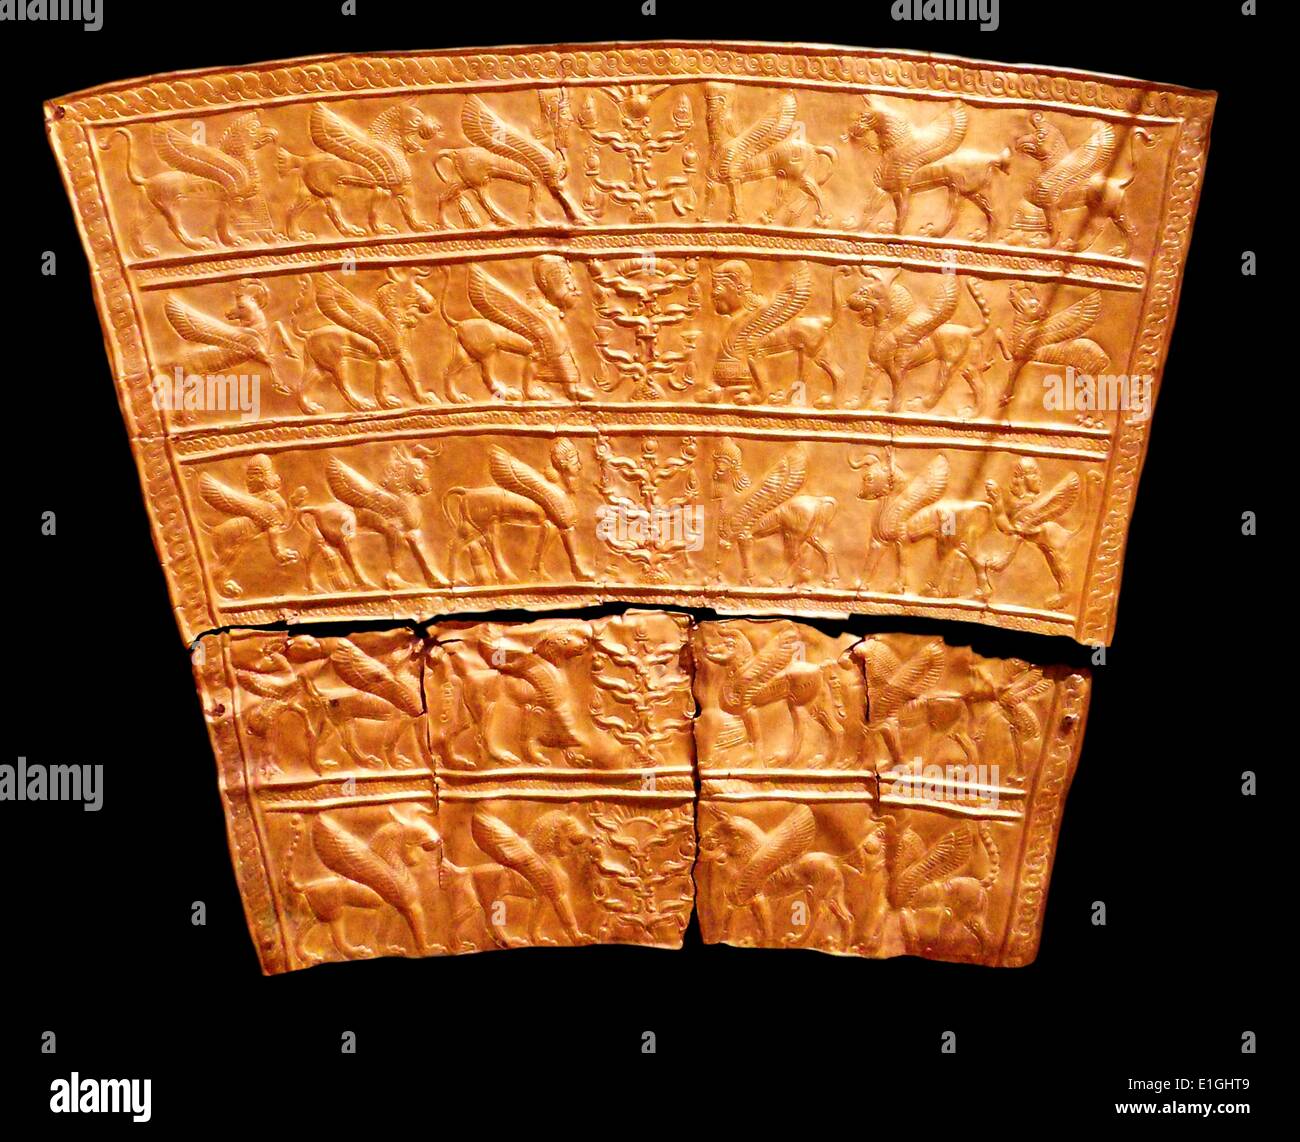 Placas con criaturas aladas acercando árboles estilizados. Oro, del noroeste de Irán, 8ª-7ª siglo A.C. Foto de stock